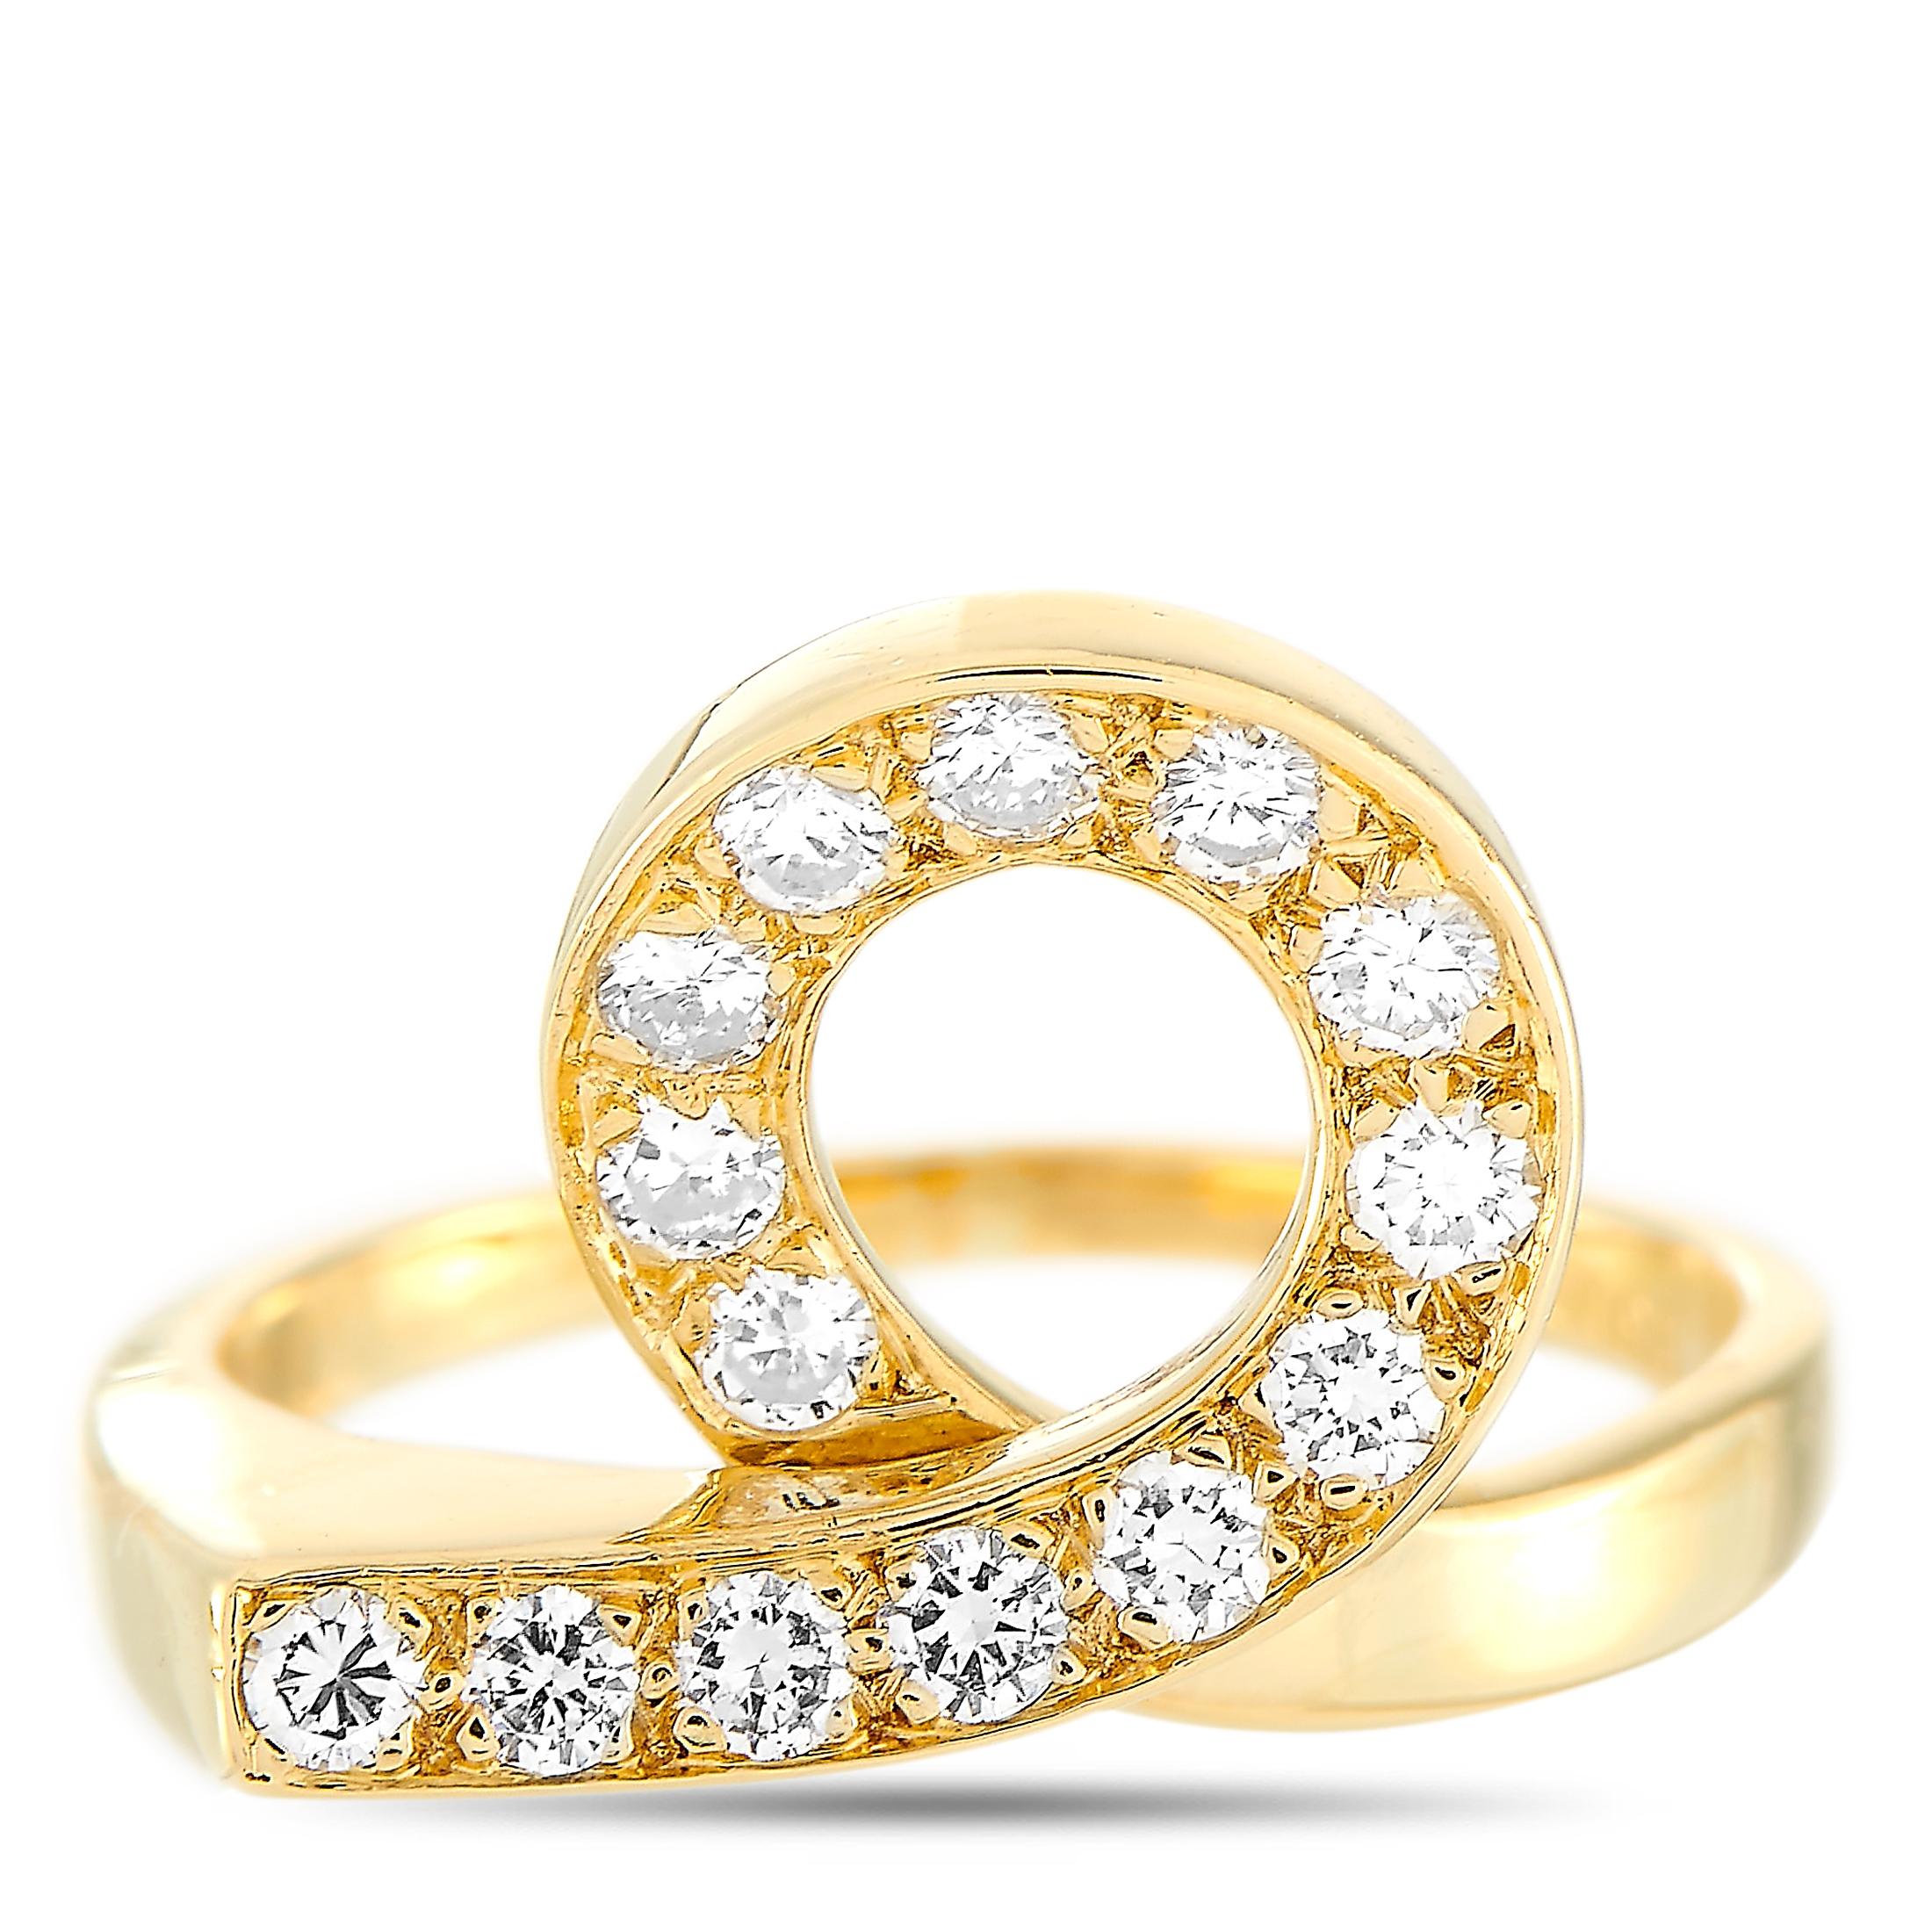 Women's Van Cleef & Arpels 18 Karat Yellow Gold 0.30 Carat Diamond Ring